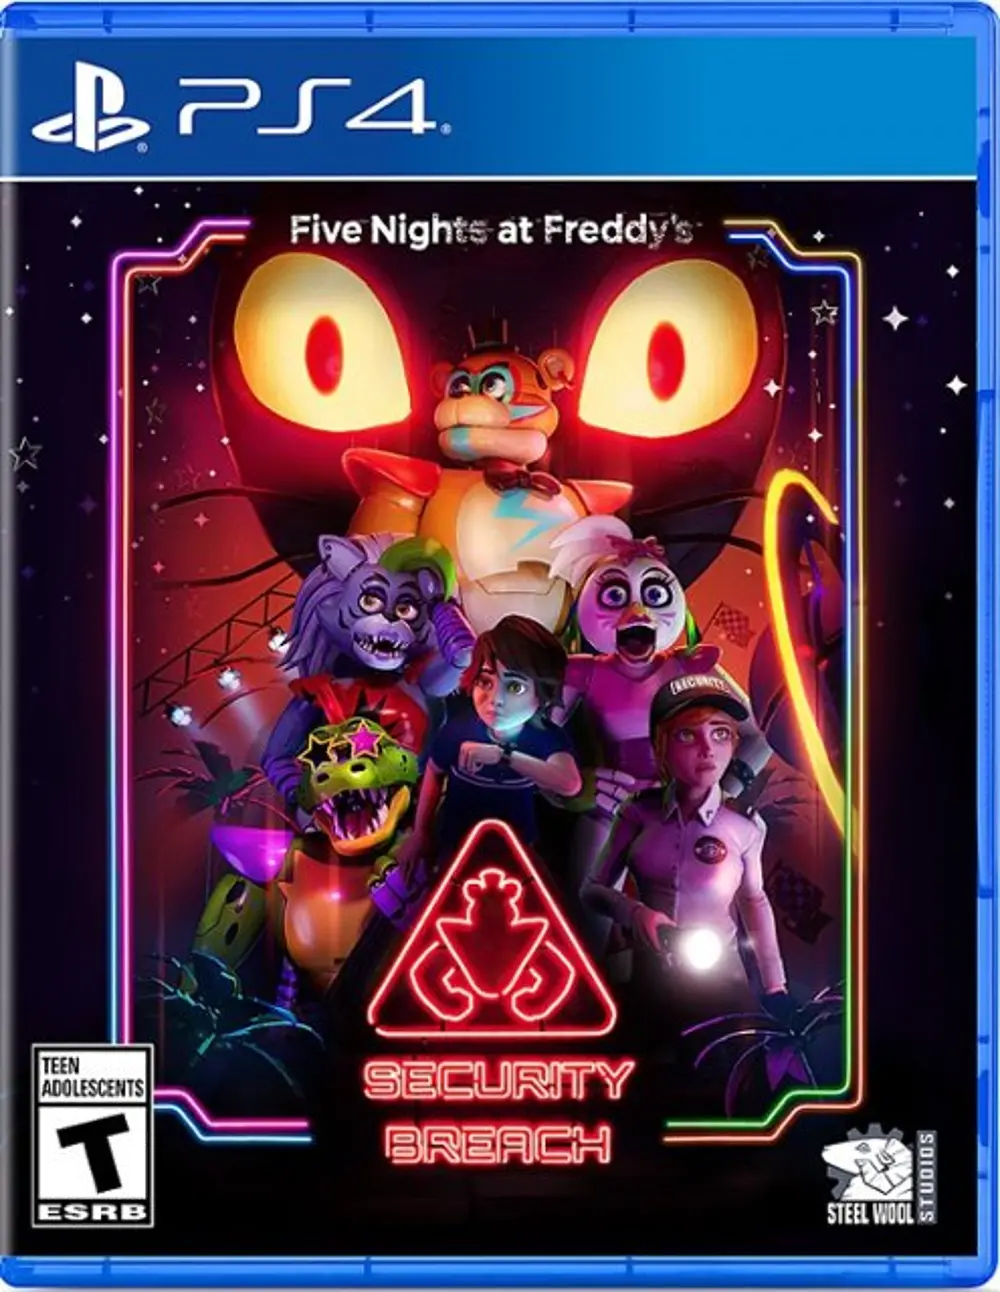 PS4/FNAF-SECU_BREACH Five Nights at Freddy's - Security Breach  - PS4-1